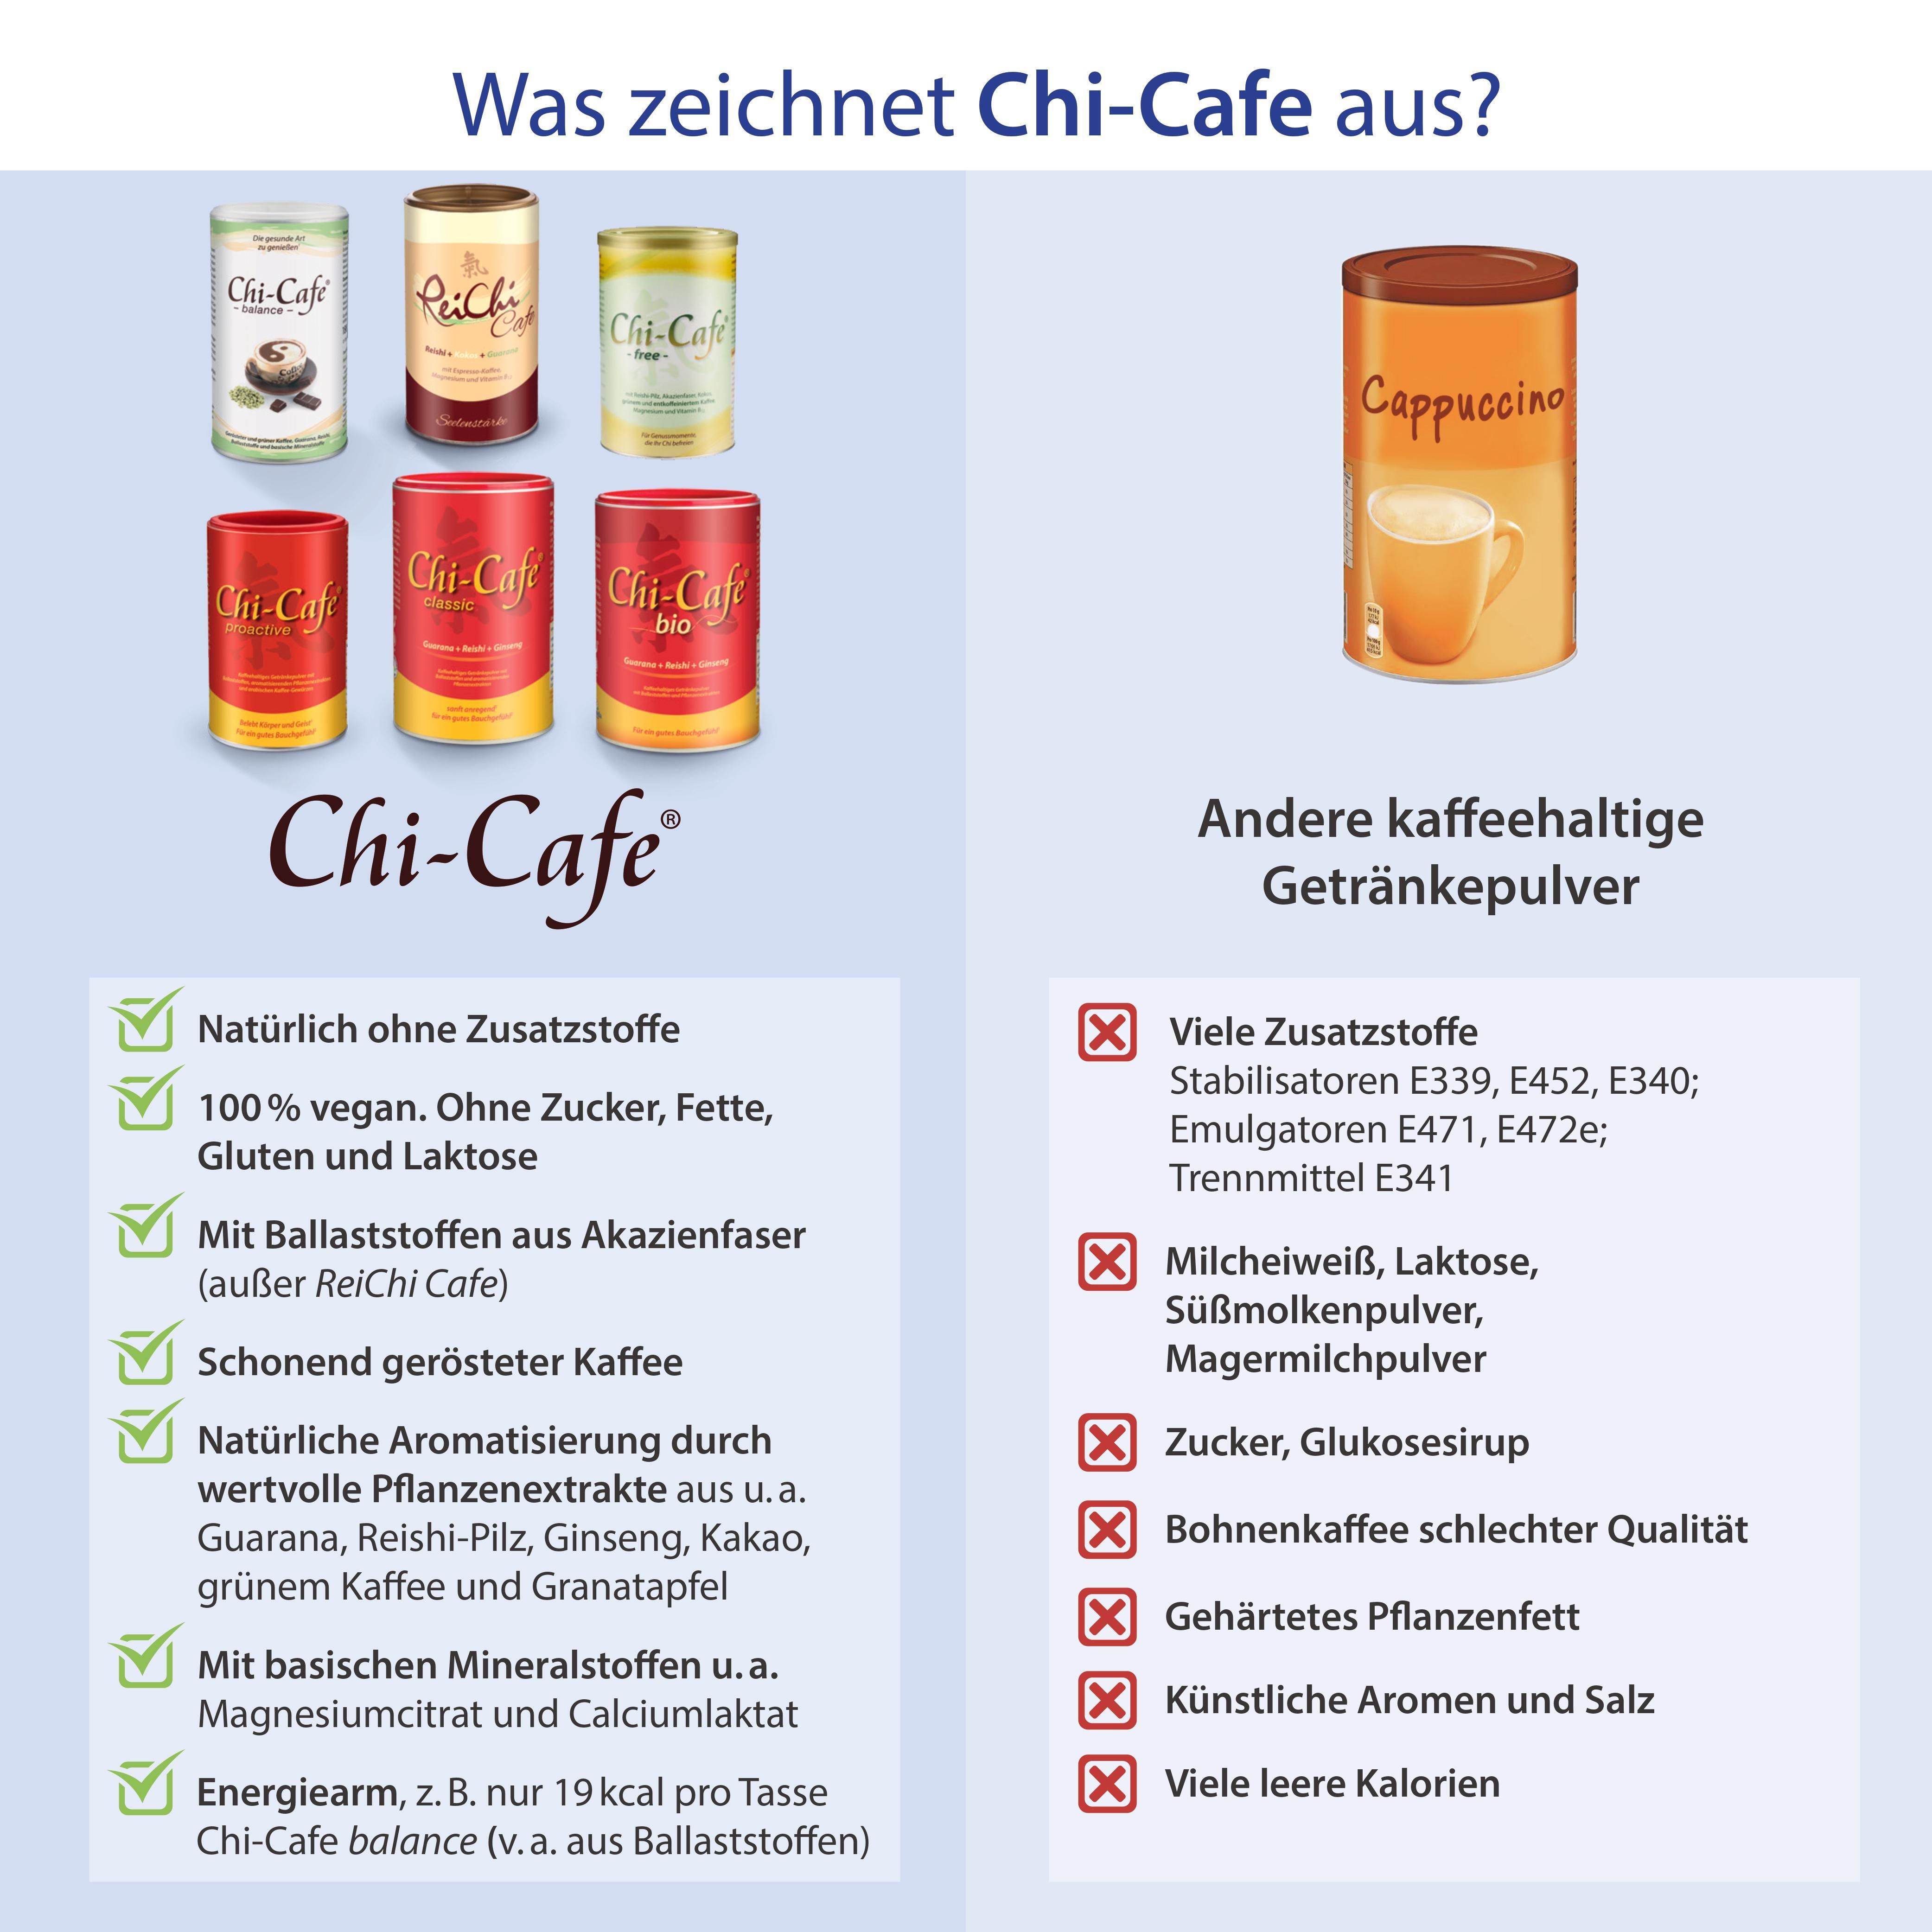 Chi-Cafe proactive Wellness Kaffee mit Akazienfaser Guarana Reishi-Pilz Ginseng